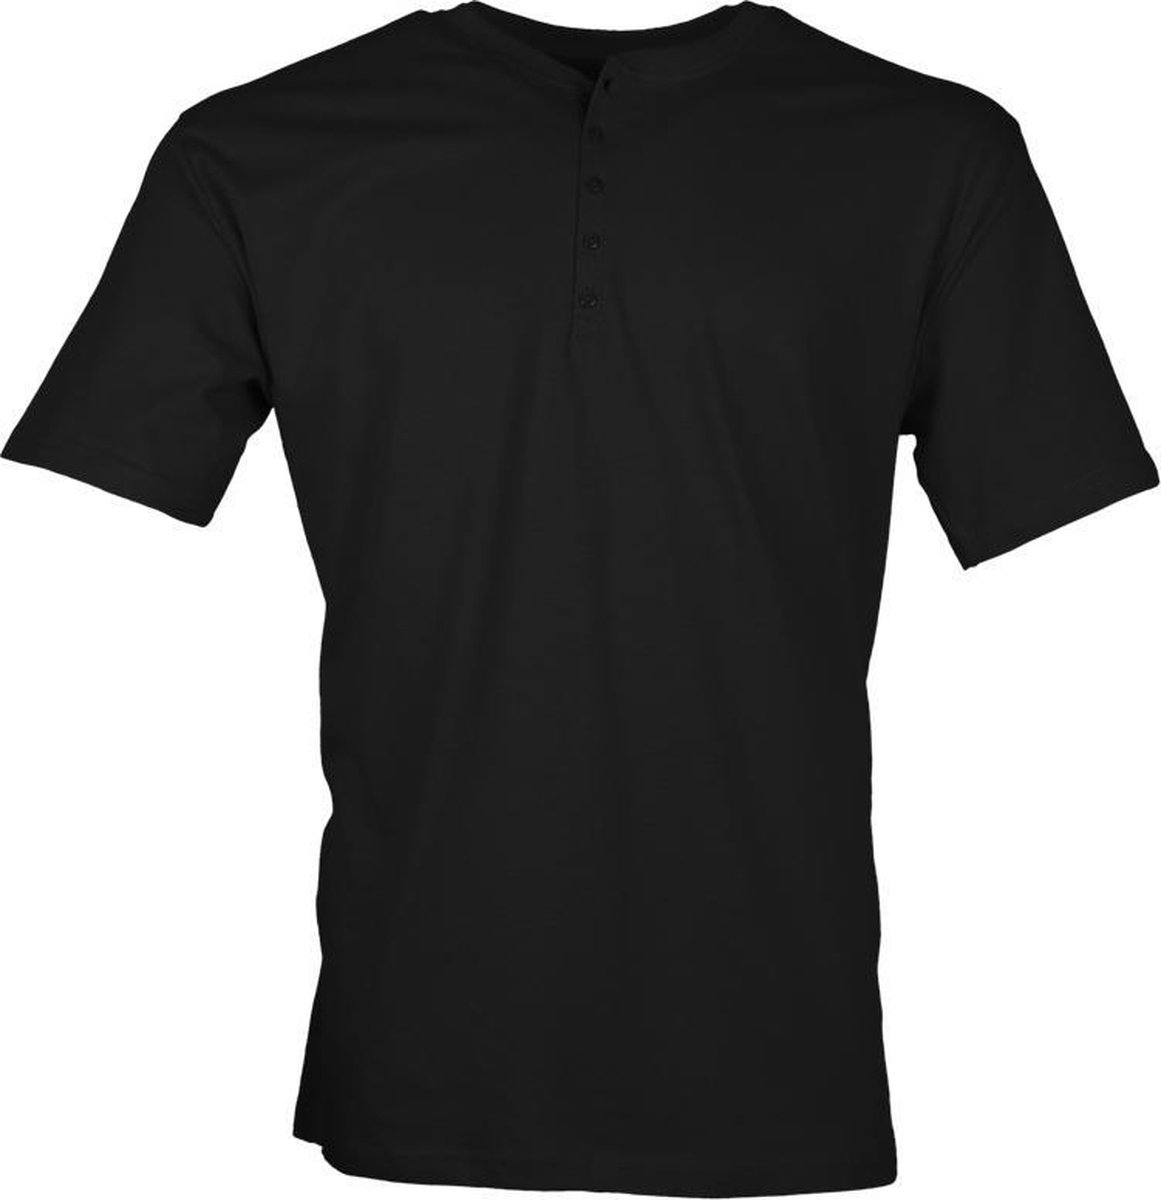 Losan Basic - Heren T-Shirt - Korte Mouw - Ronde Hals - Knoopjes - Zwart - Maat XL